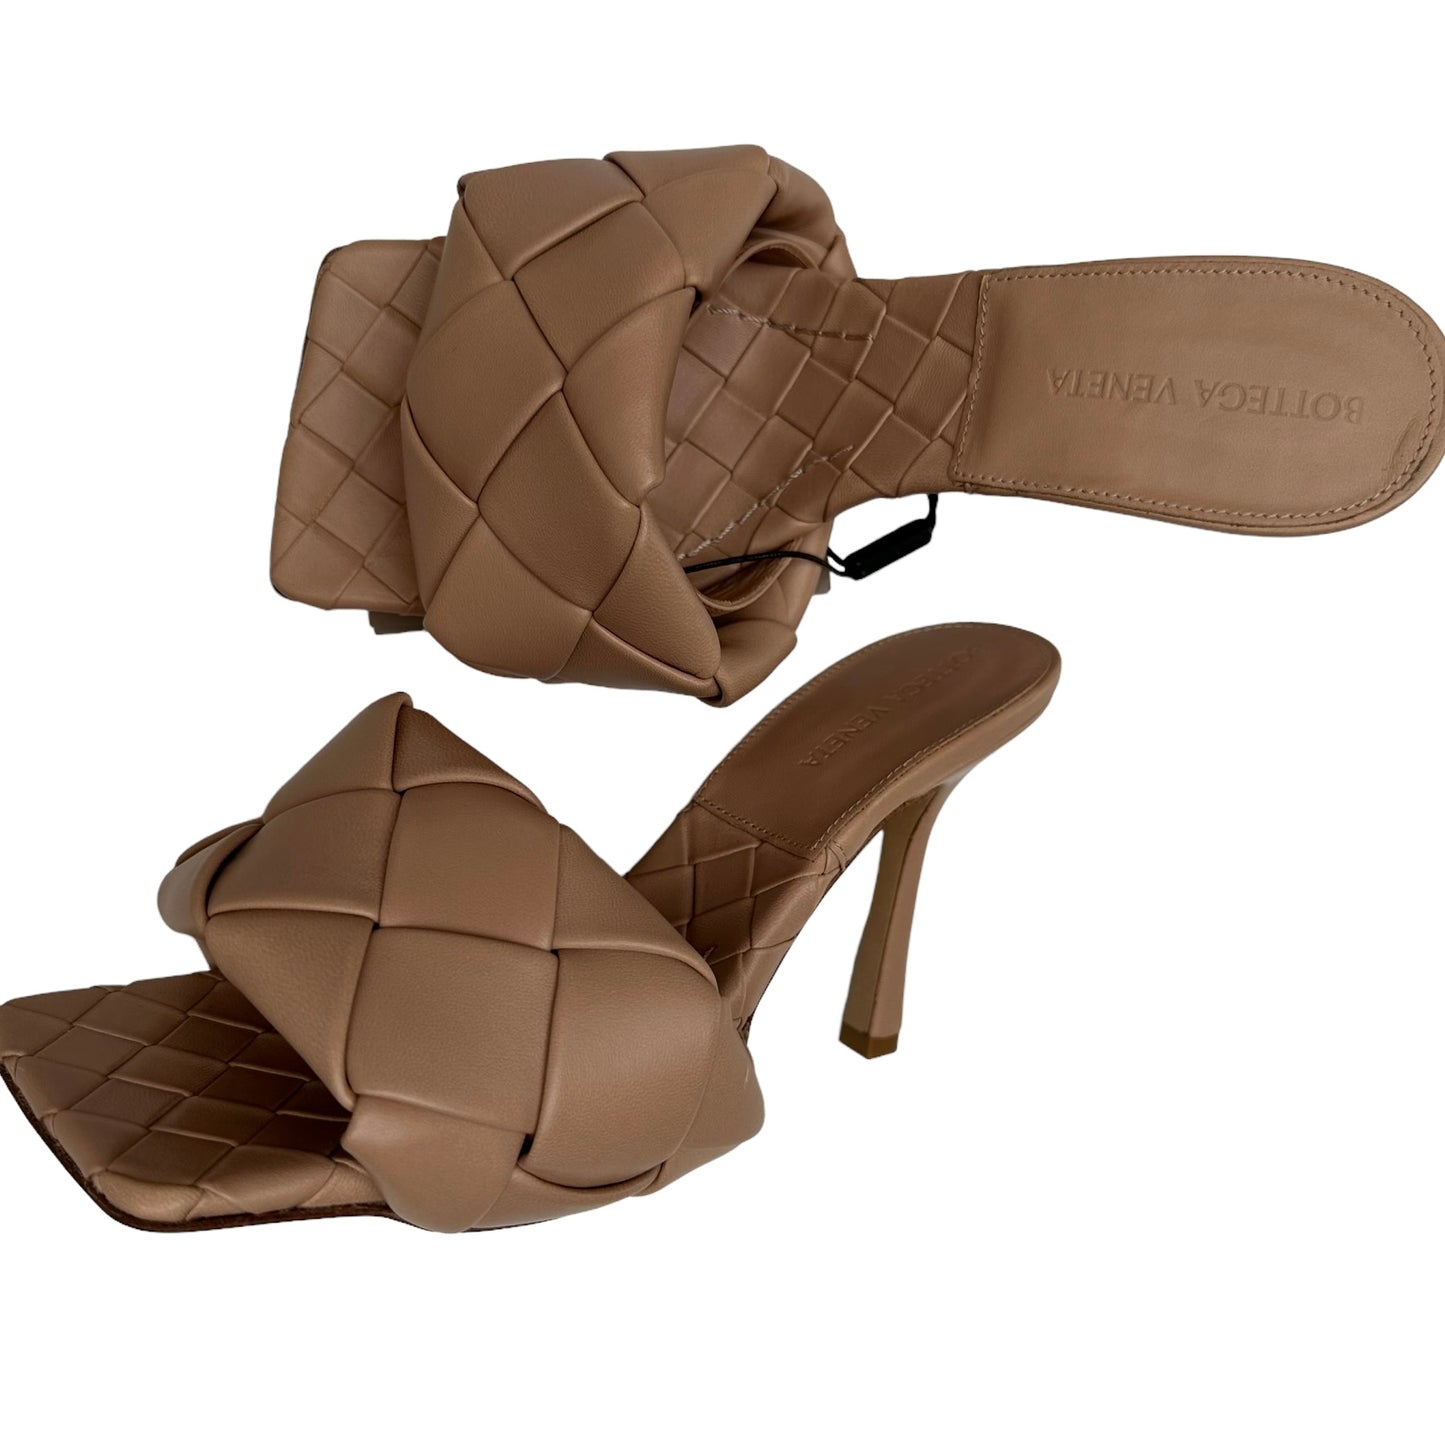 Nude Leather Heels - 6.5